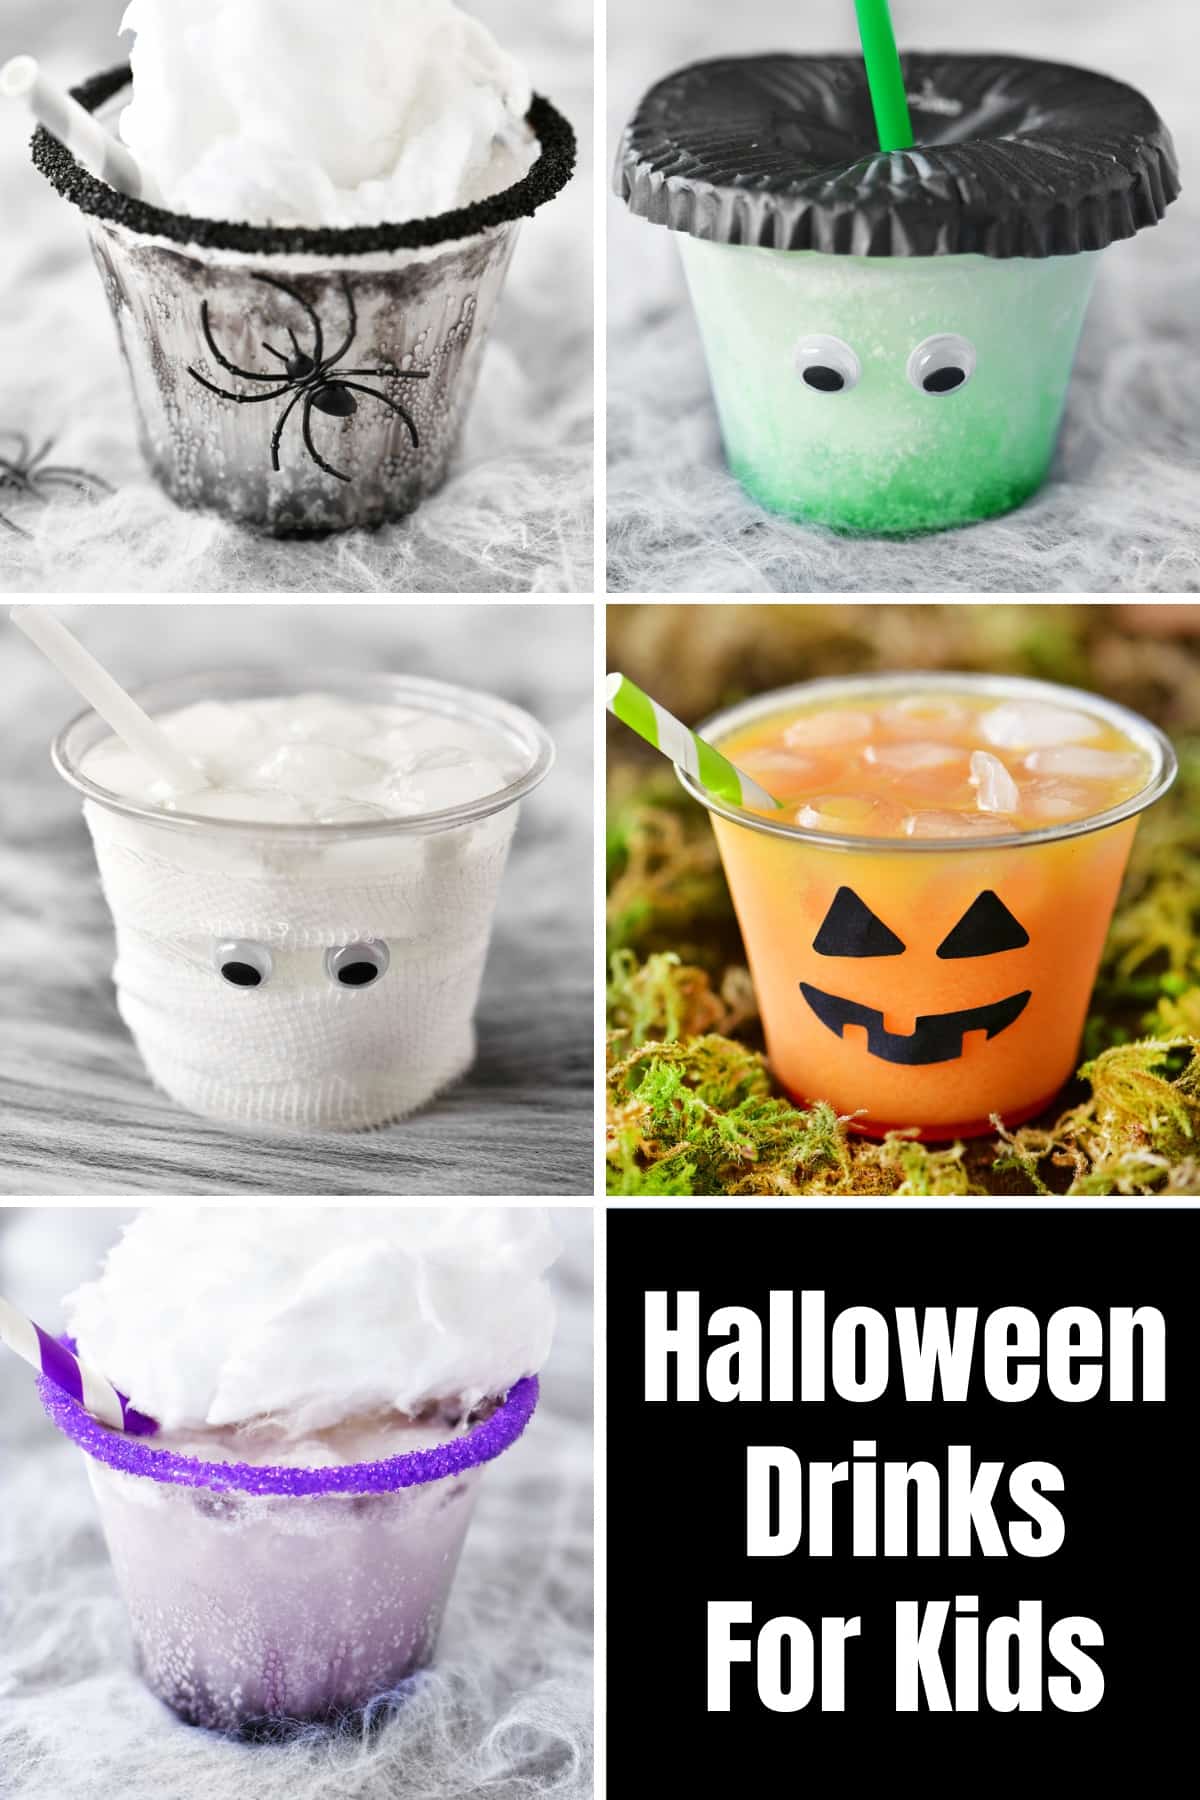 Halloween drinks for kids.